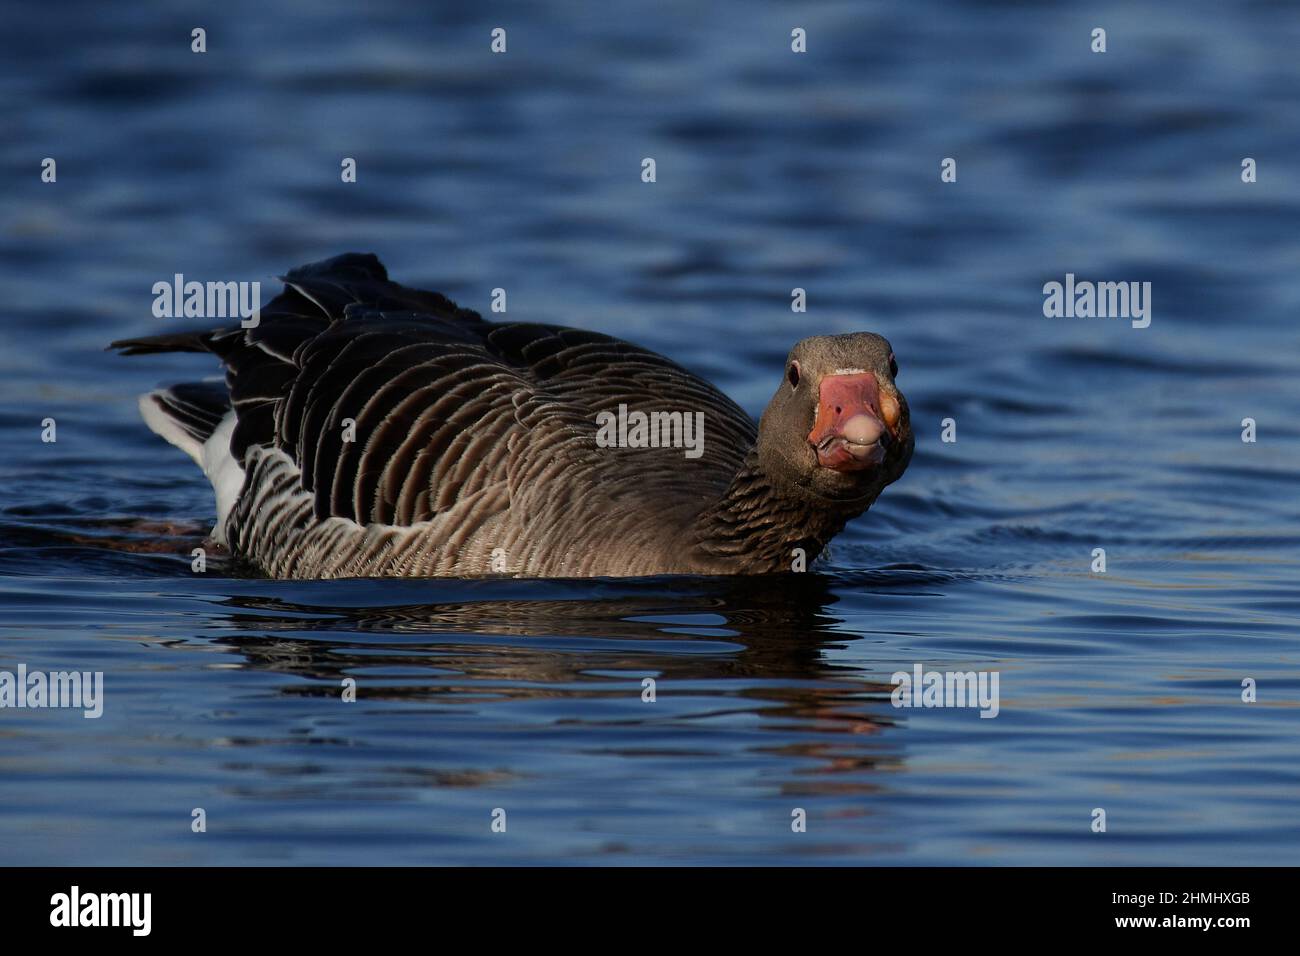 Greylag goose in aggressive posture in its habitat Stock Photo